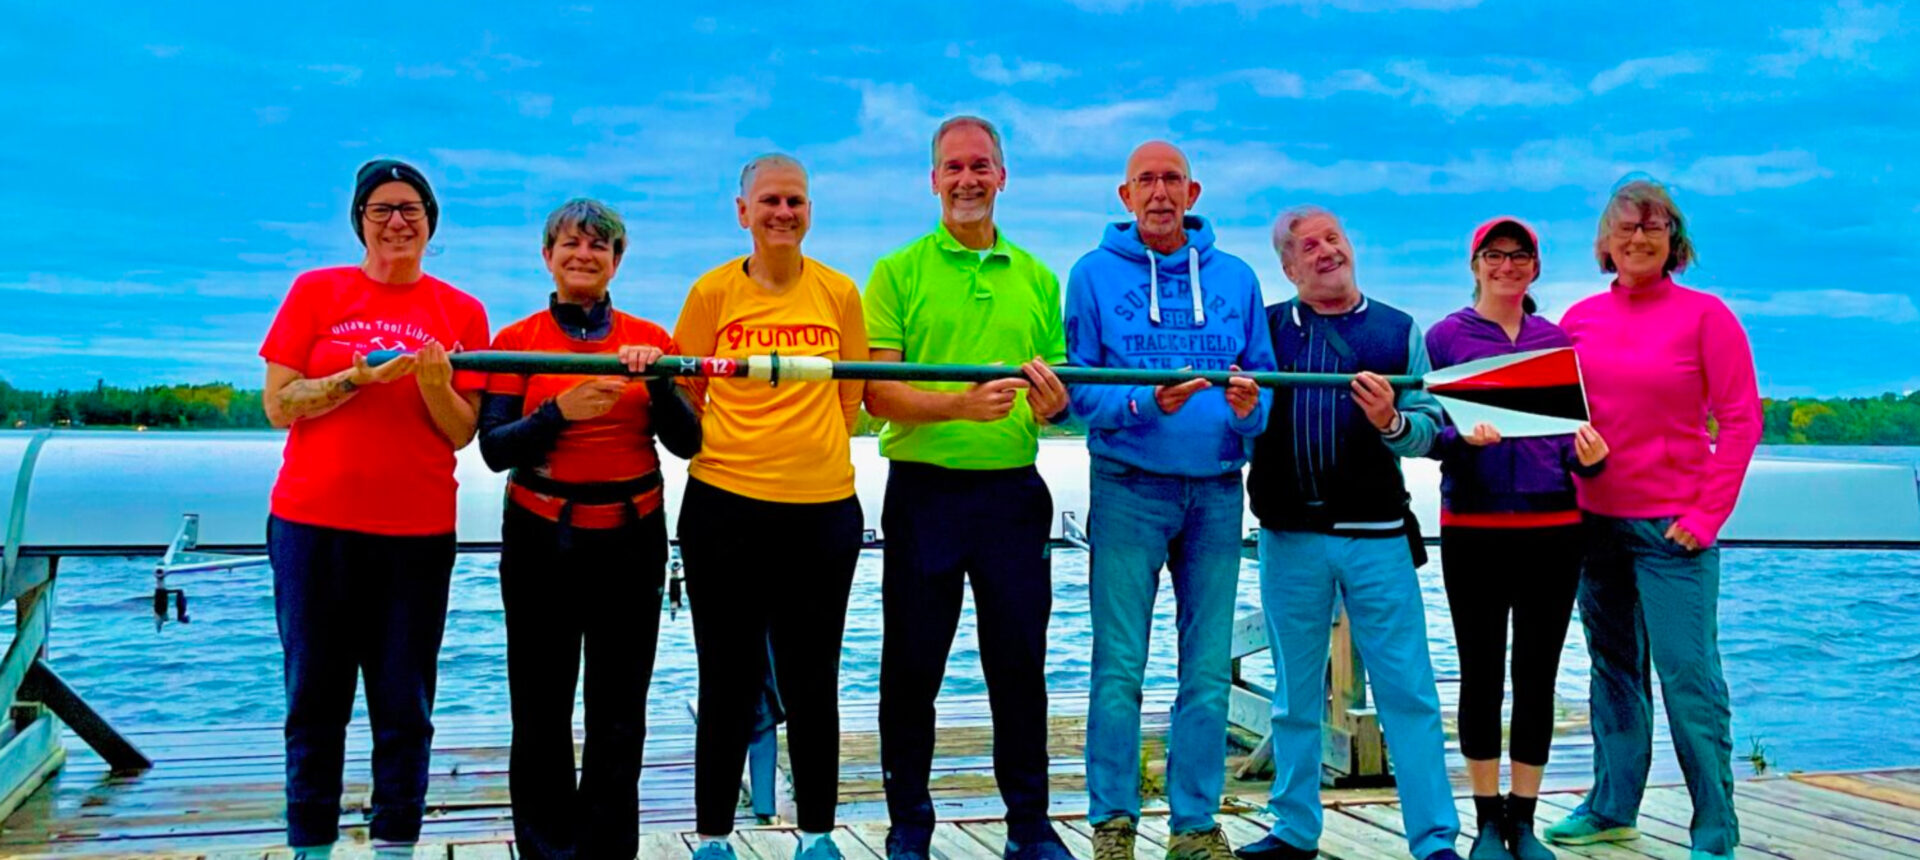 Ottawa New Edinburgh Club Fostering Inclusivity, Connection and Empowerment through Rowing